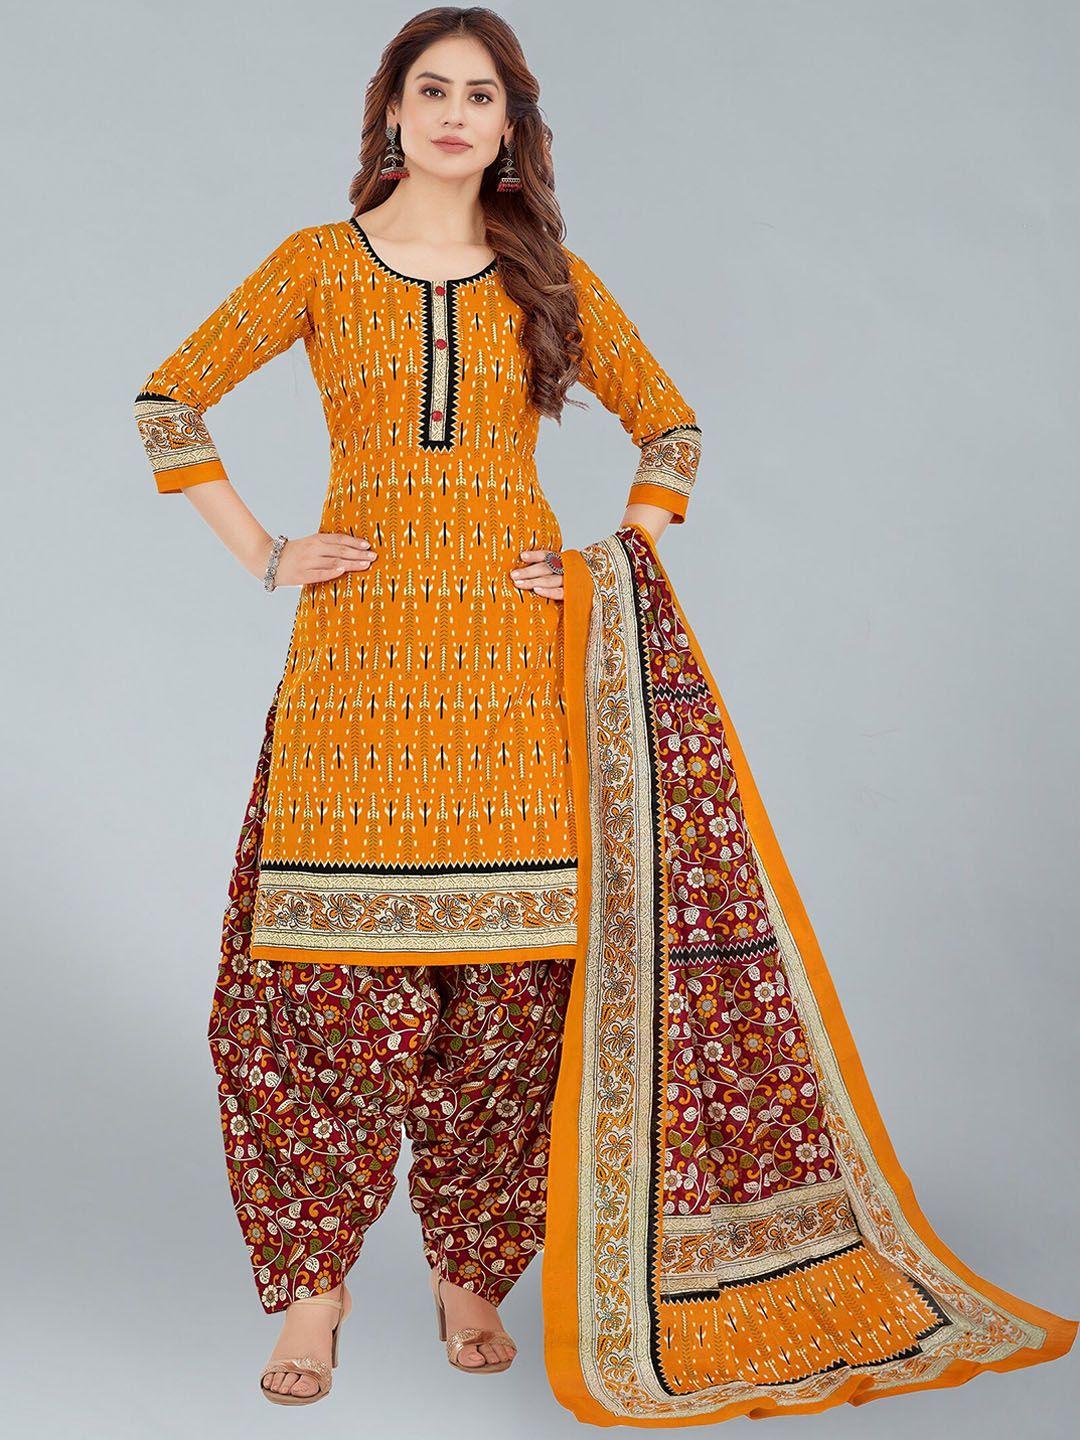 jevi-prints-women-orange-ethnic-motifs-printed-regular-pure-cotton-kurta-with-patiala-&-with-dupatta